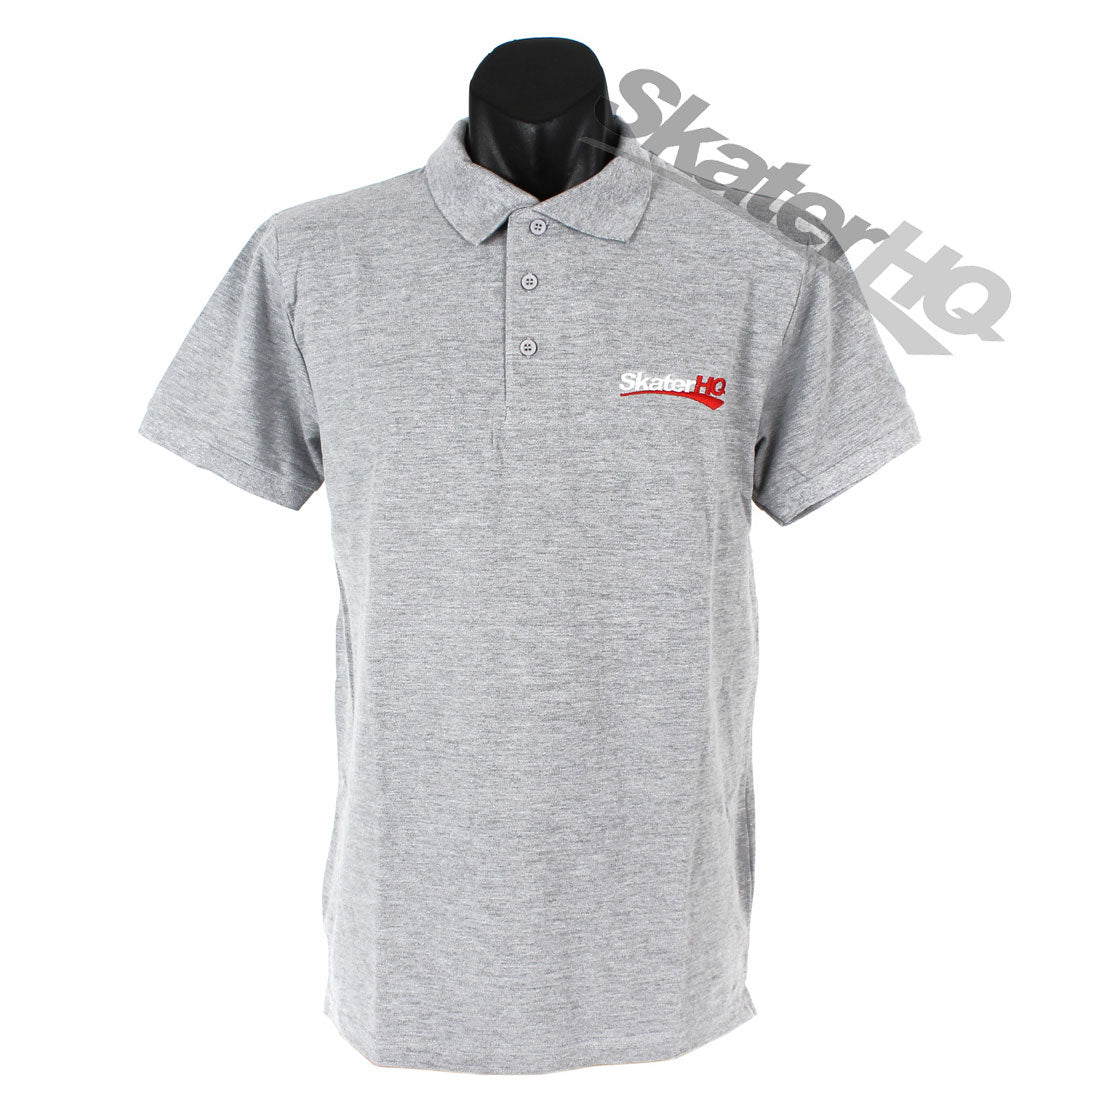 Skater HQ Adult Polo Shirt - Grey Marle Apparel Skater HQ Clothing